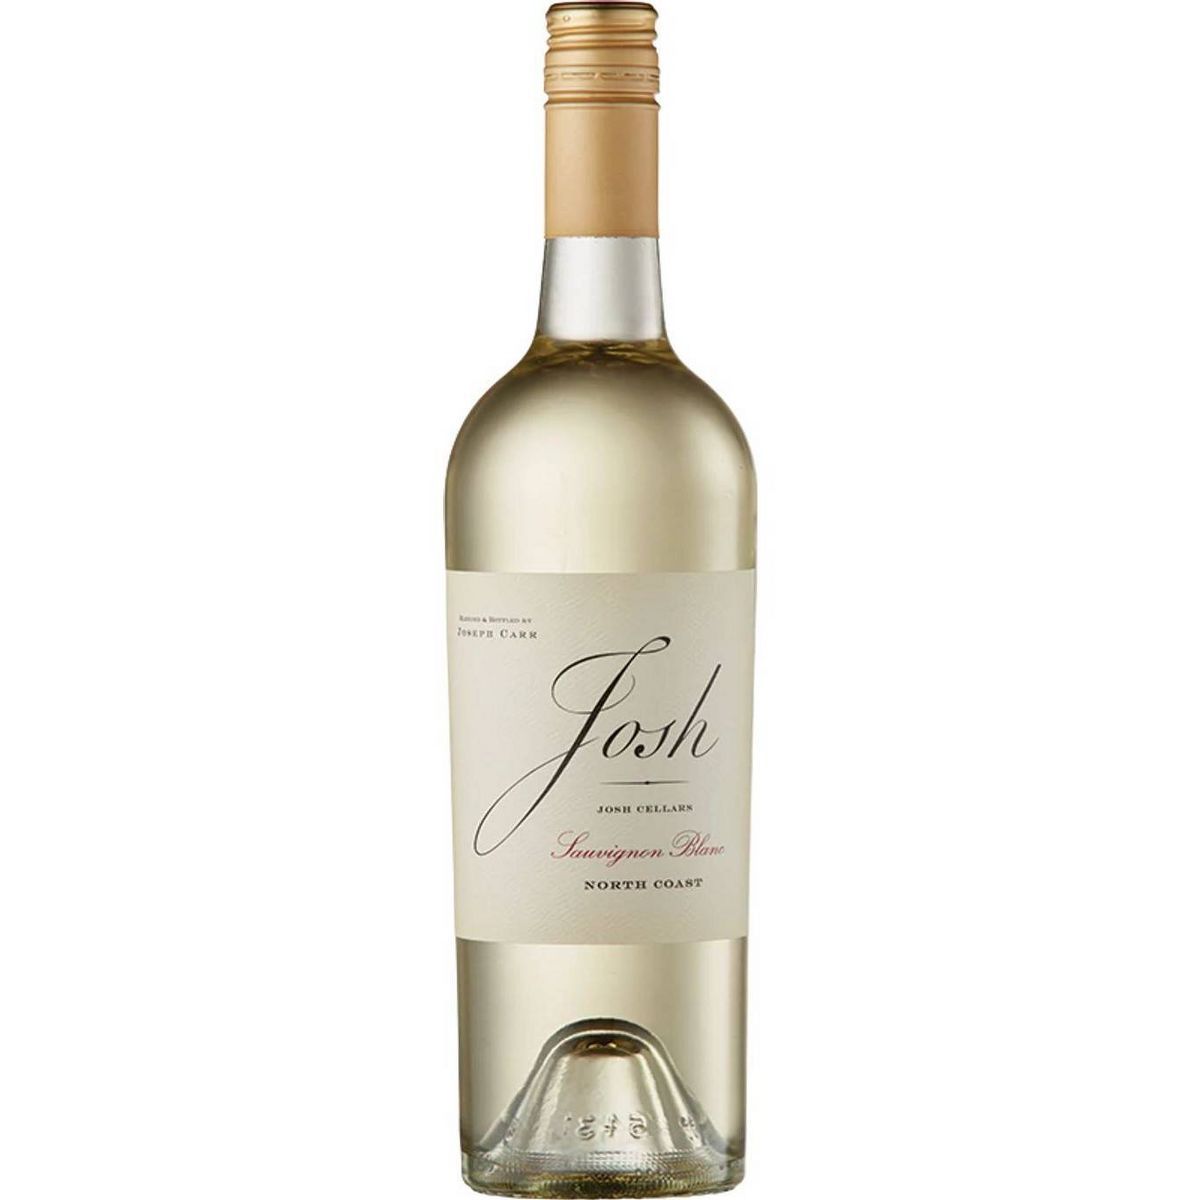 Josh Sauvignon Blanc White Wine - 750ml Bottle | Target